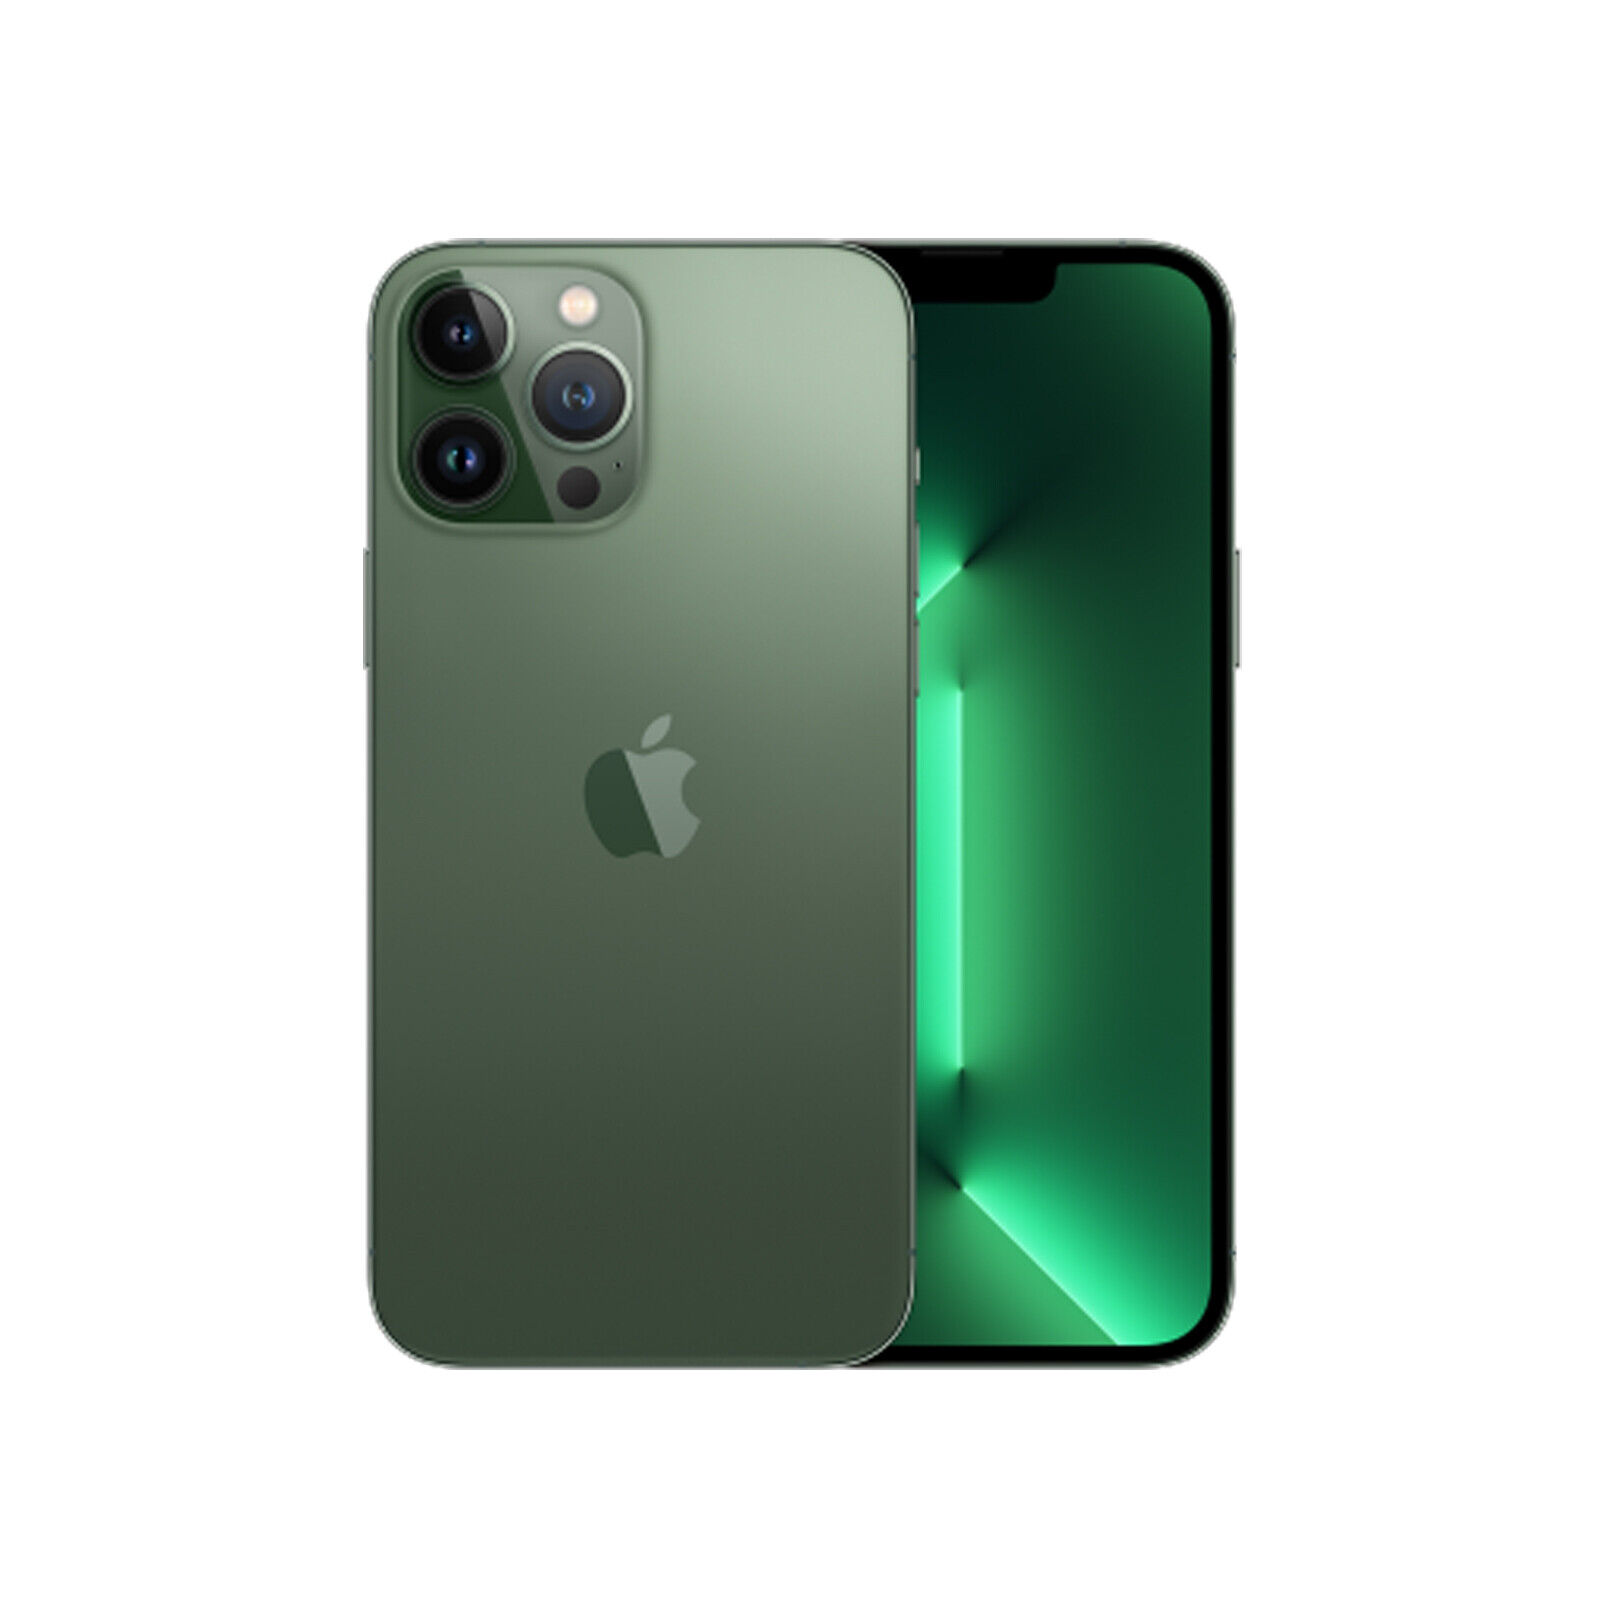 Apple iPhone 13 Pro Max - 128GB - Alpine Green (Unlocked) for 